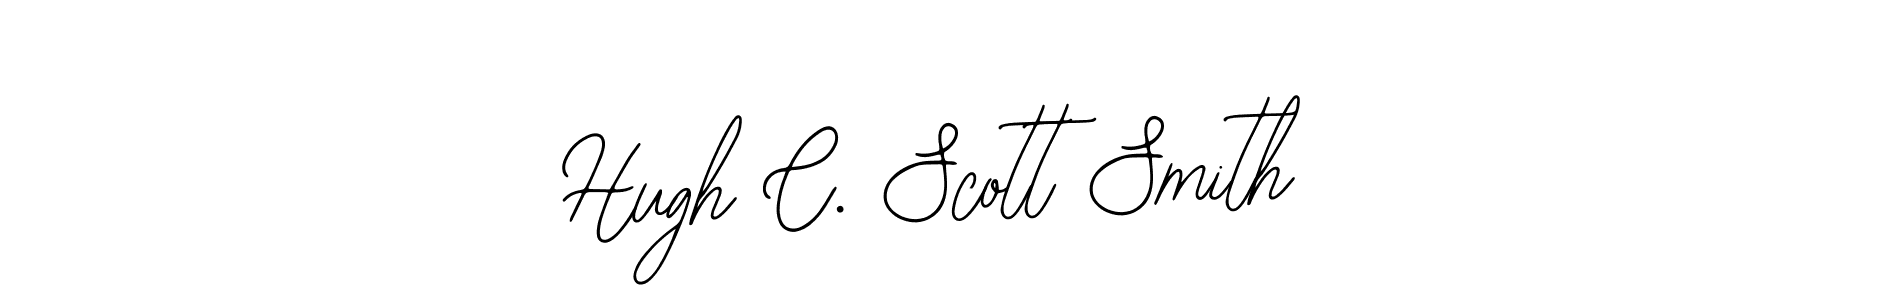 How to make Hugh C. Scott Smith signature? Bearetta-2O07w is a professional autograph style. Create handwritten signature for Hugh C. Scott Smith name. Hugh C. Scott Smith signature style 12 images and pictures png